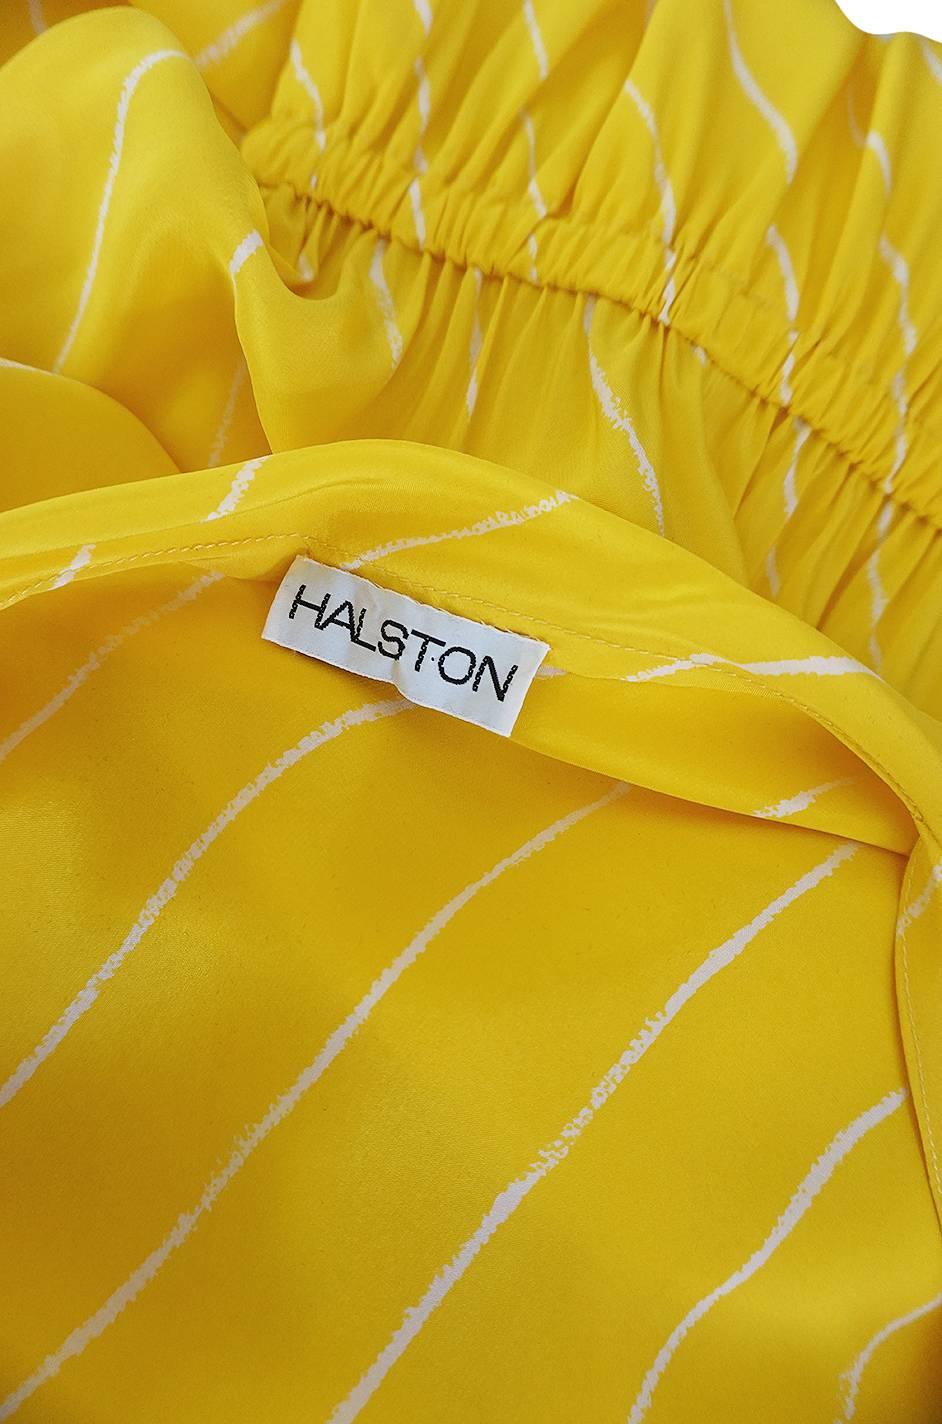 S/S 1976 Halston Demi-Couture Bias Cut Yellow Silk Dress 5